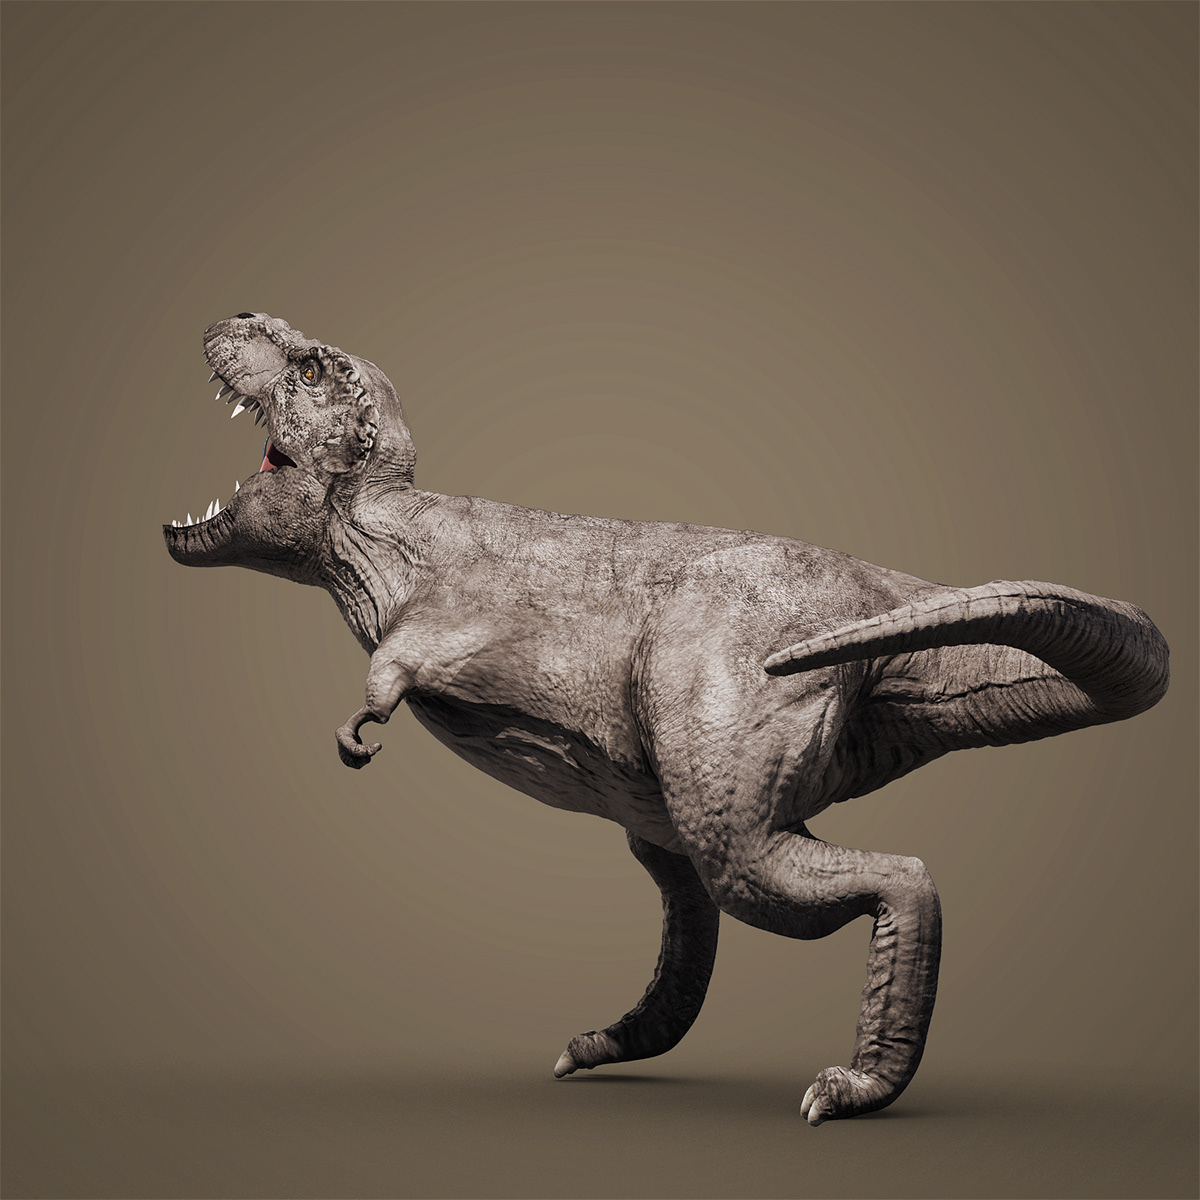 trex REX dinossauro Dinosaur reptil reptile monster Samsung